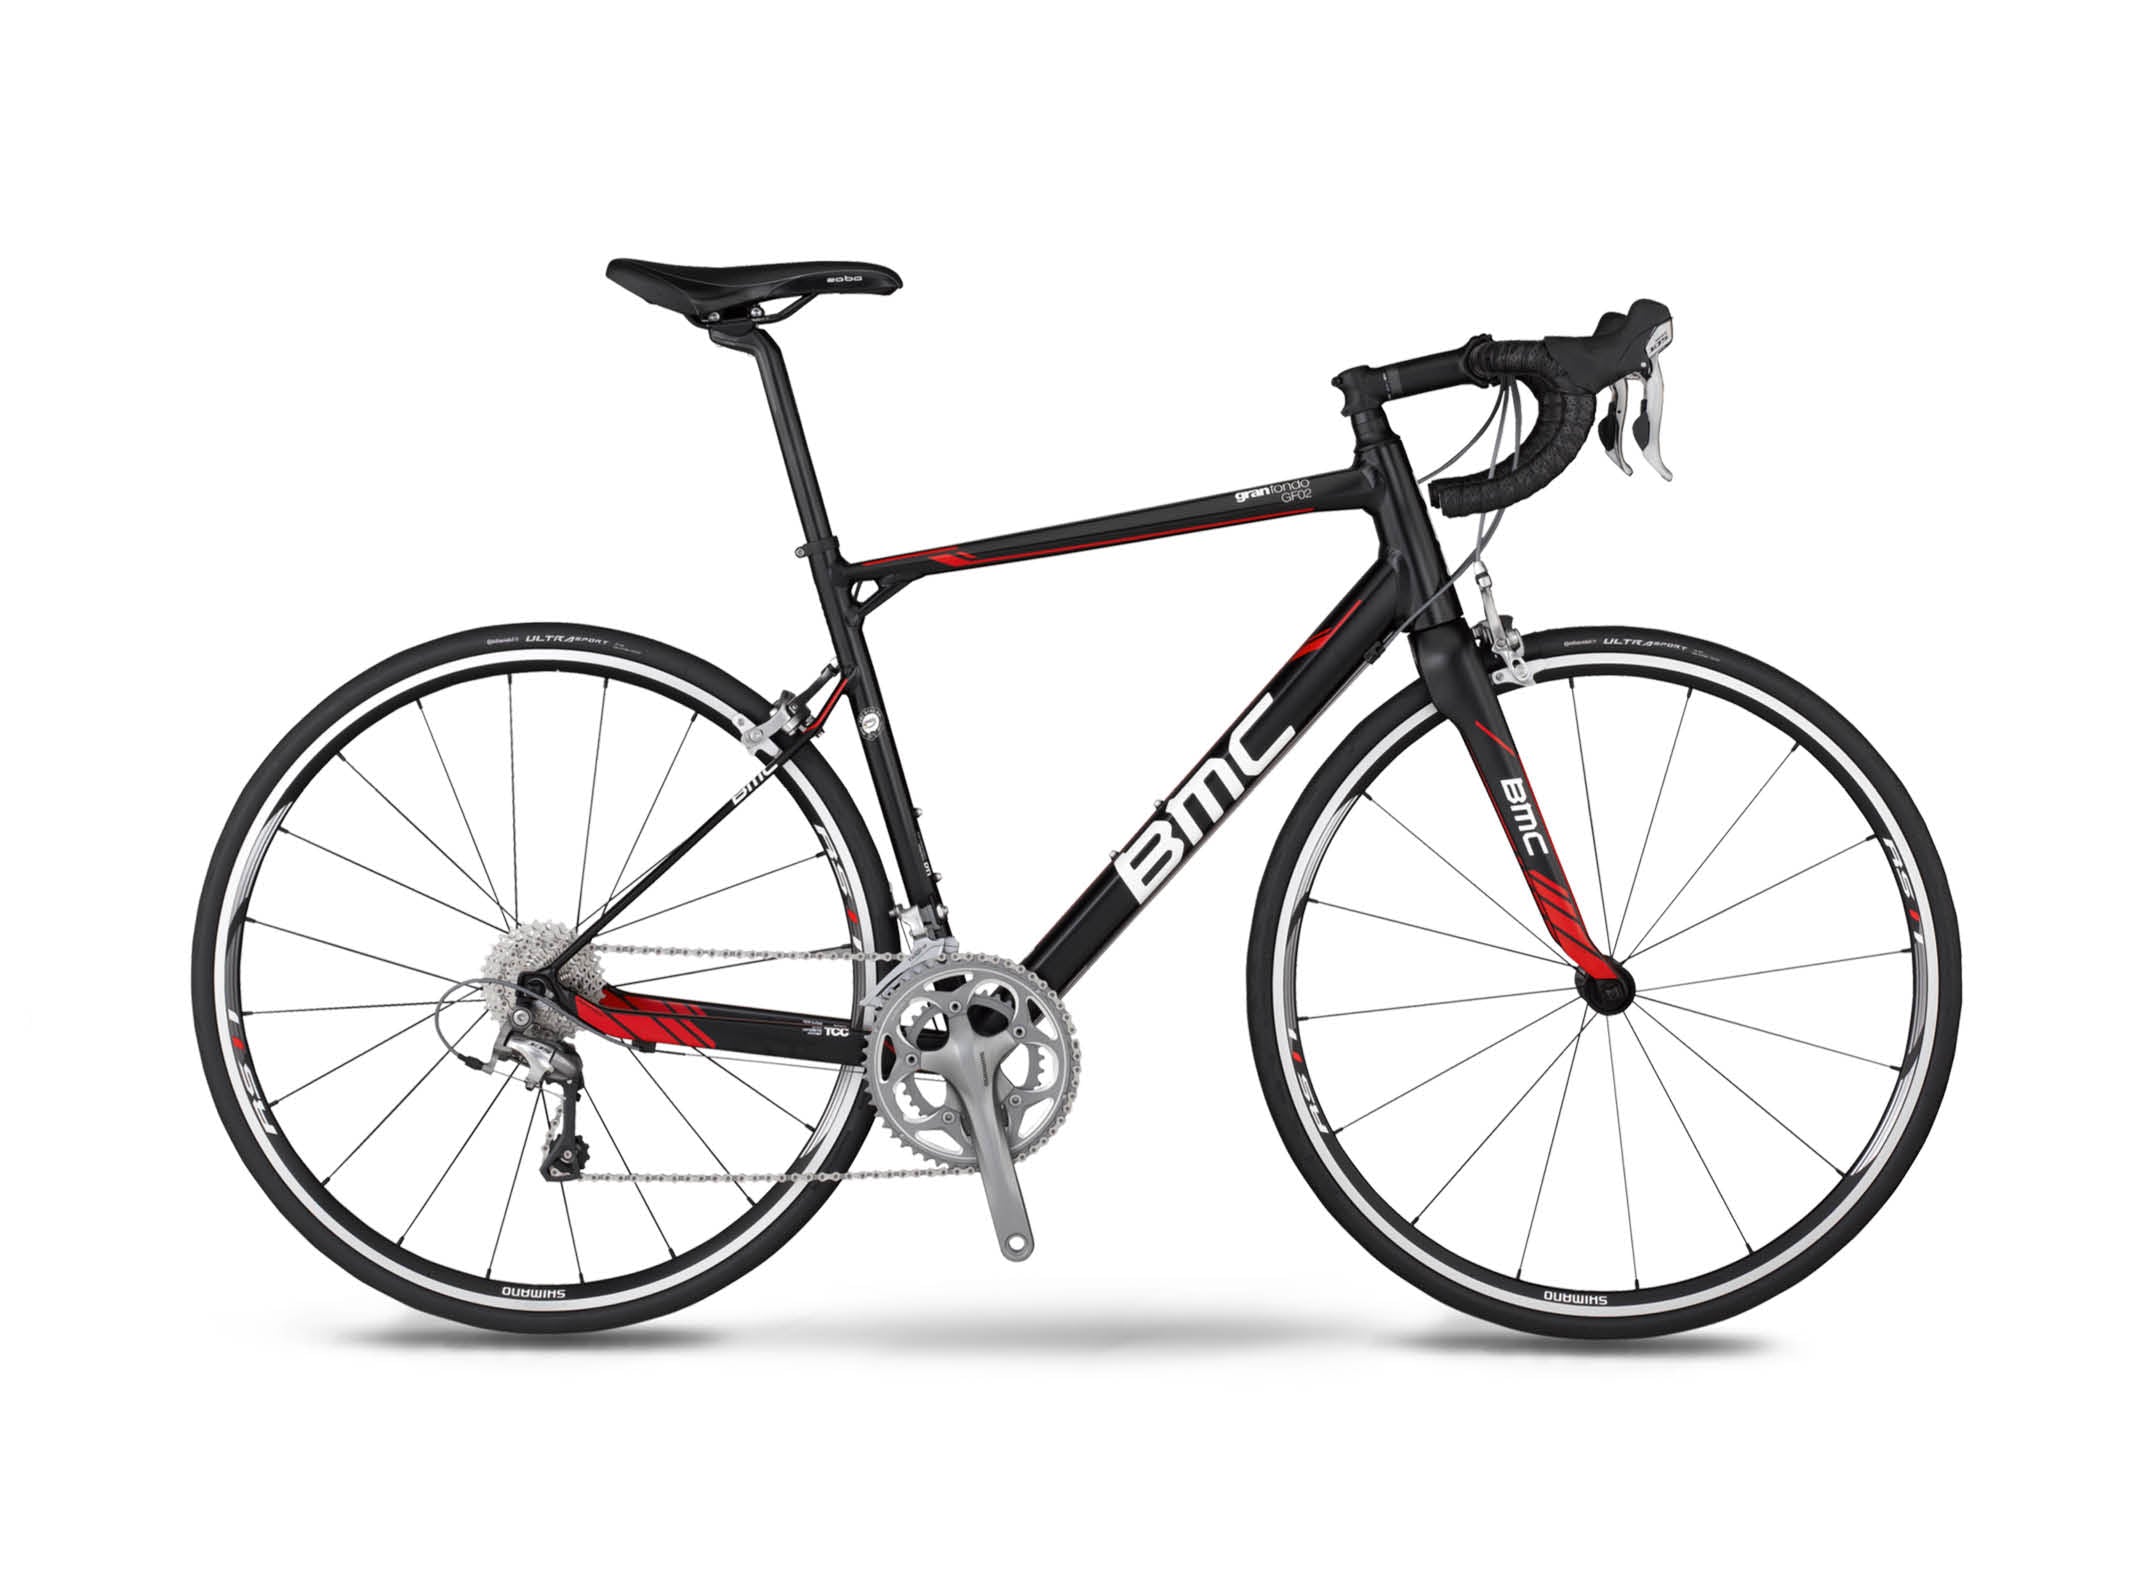 Granfondo GF02 105 Compact | BMC | bikes | Road, Road | Endurance